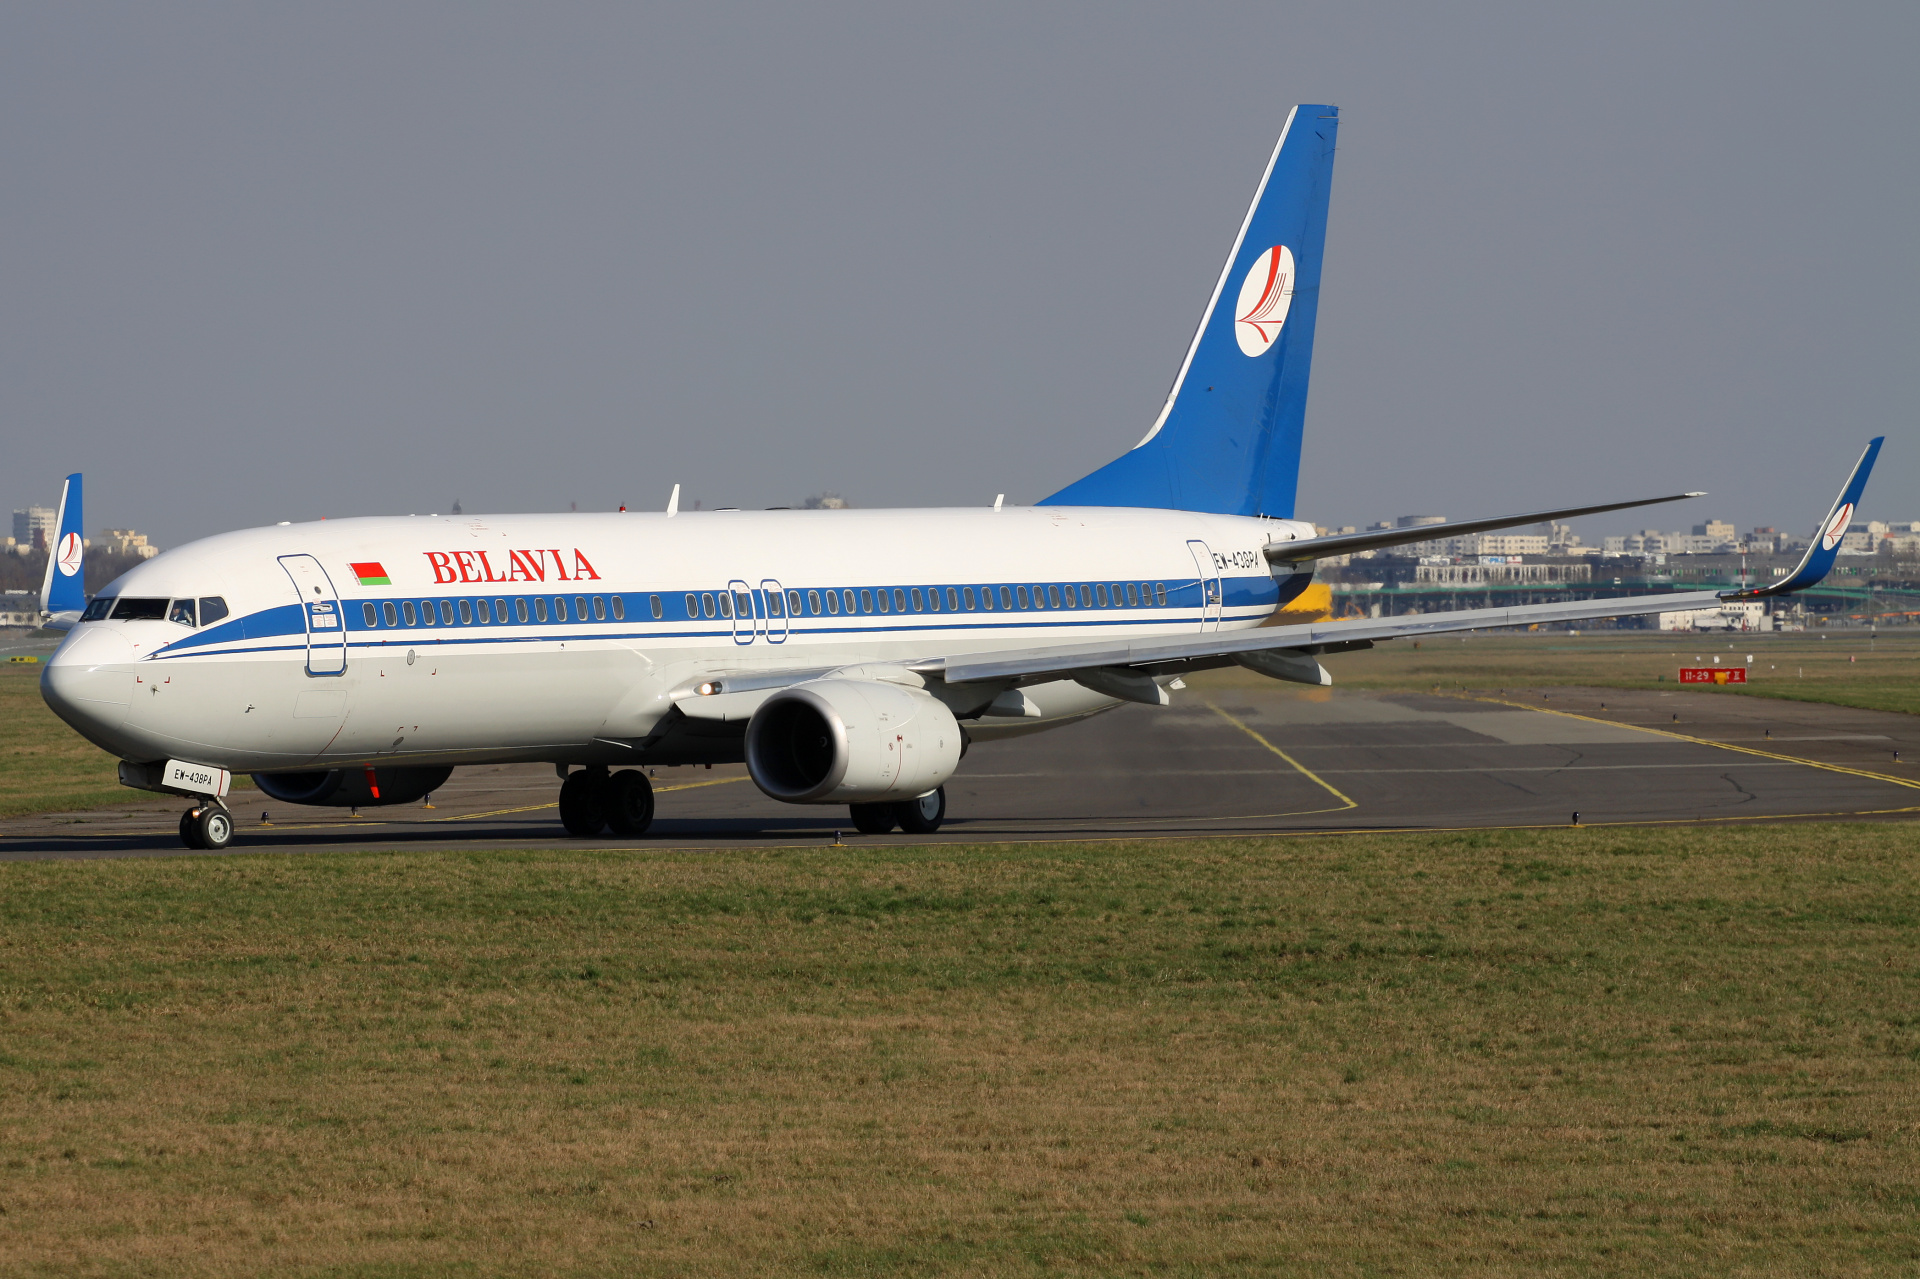 EW-438PA, Belavia (Samoloty » Spotting na EPWA » Boeing 737-800)